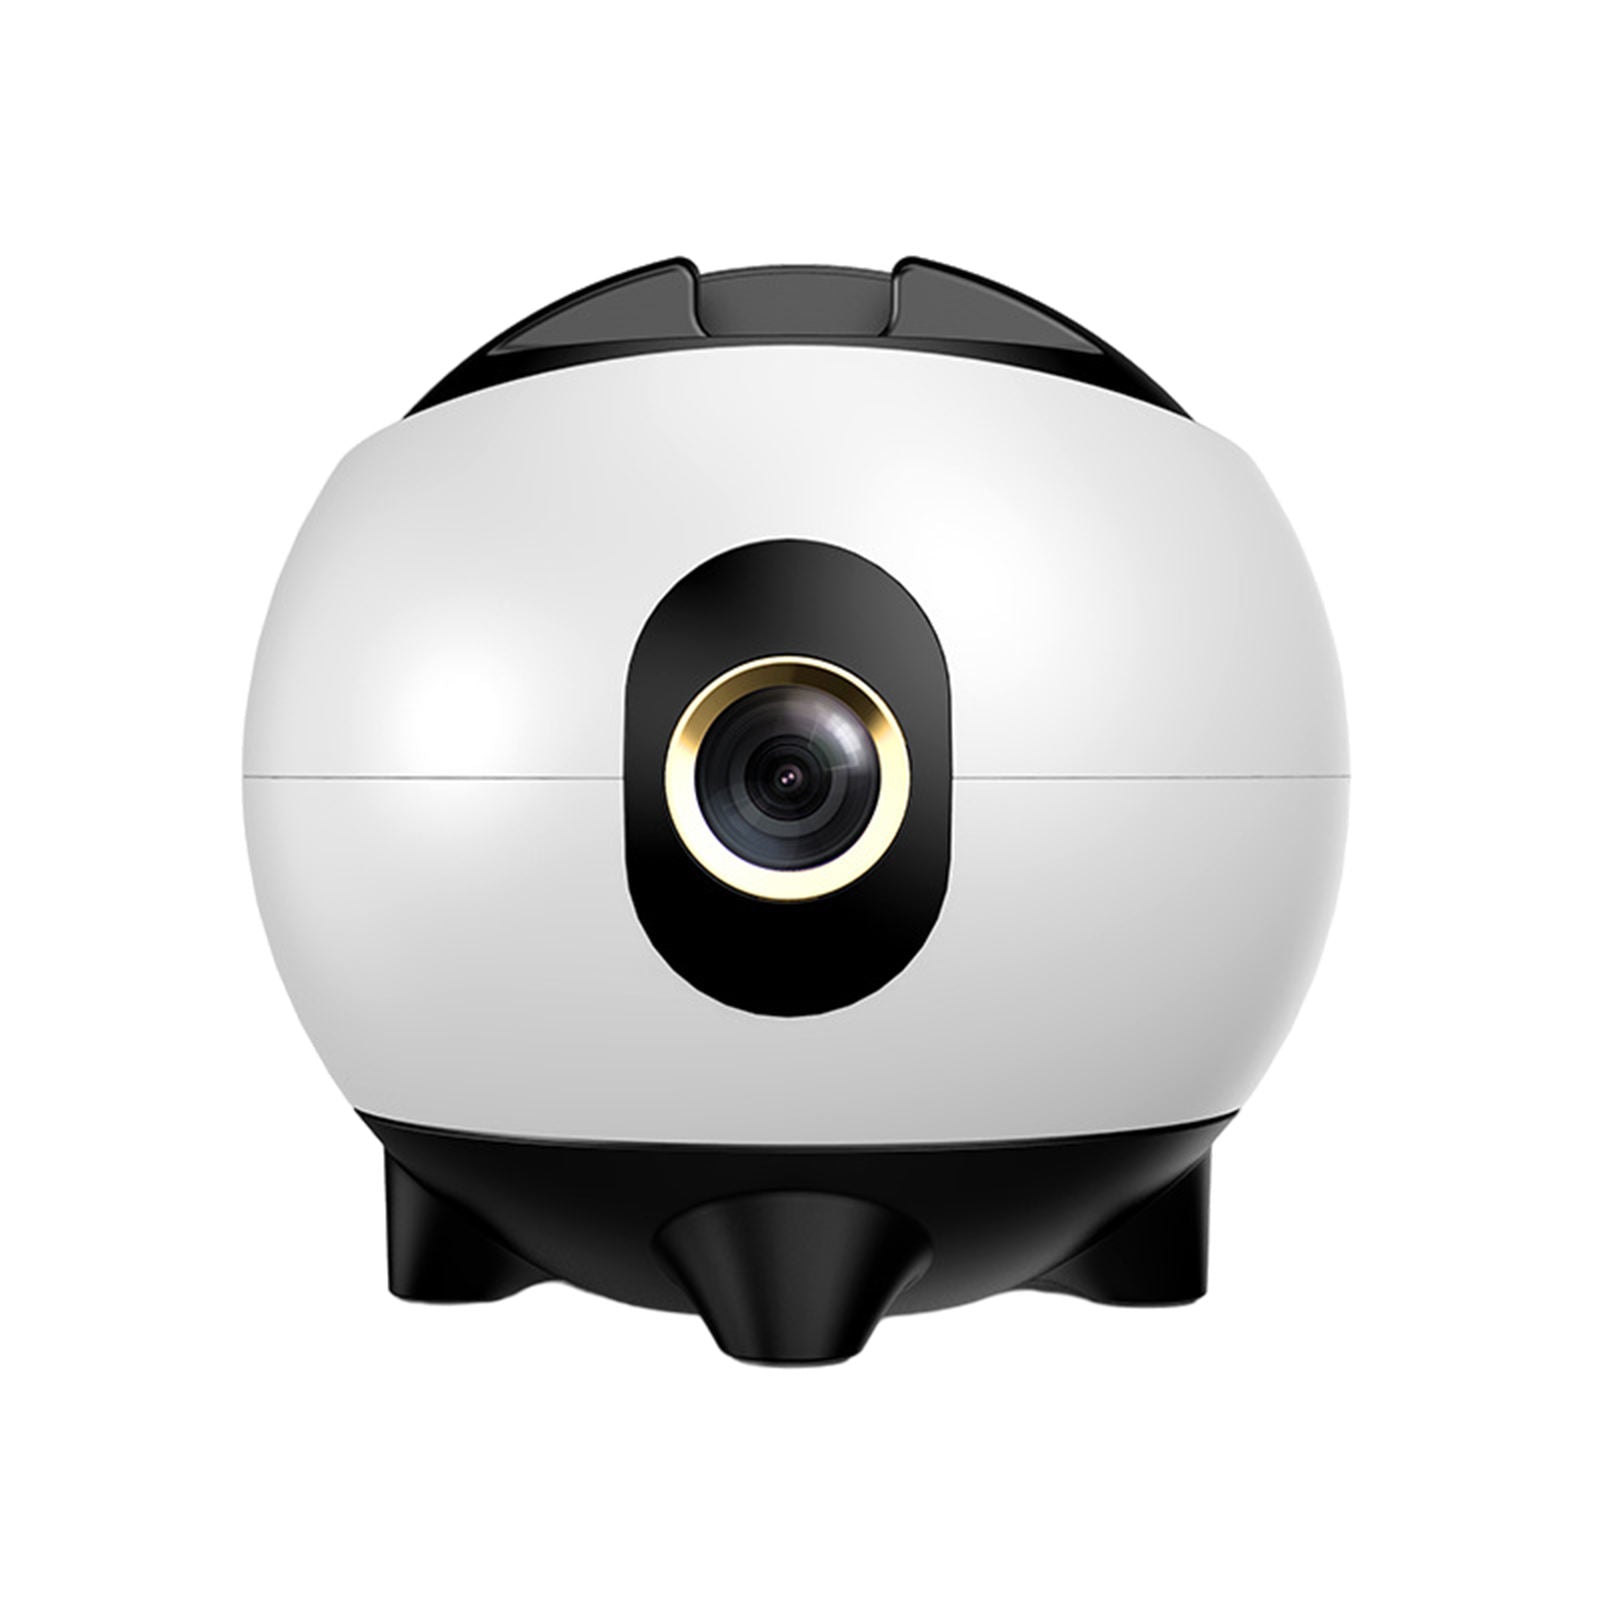 Rotating Intelligent Cameras Gimbal Stabilizer Personal Robot Cameraman Auto